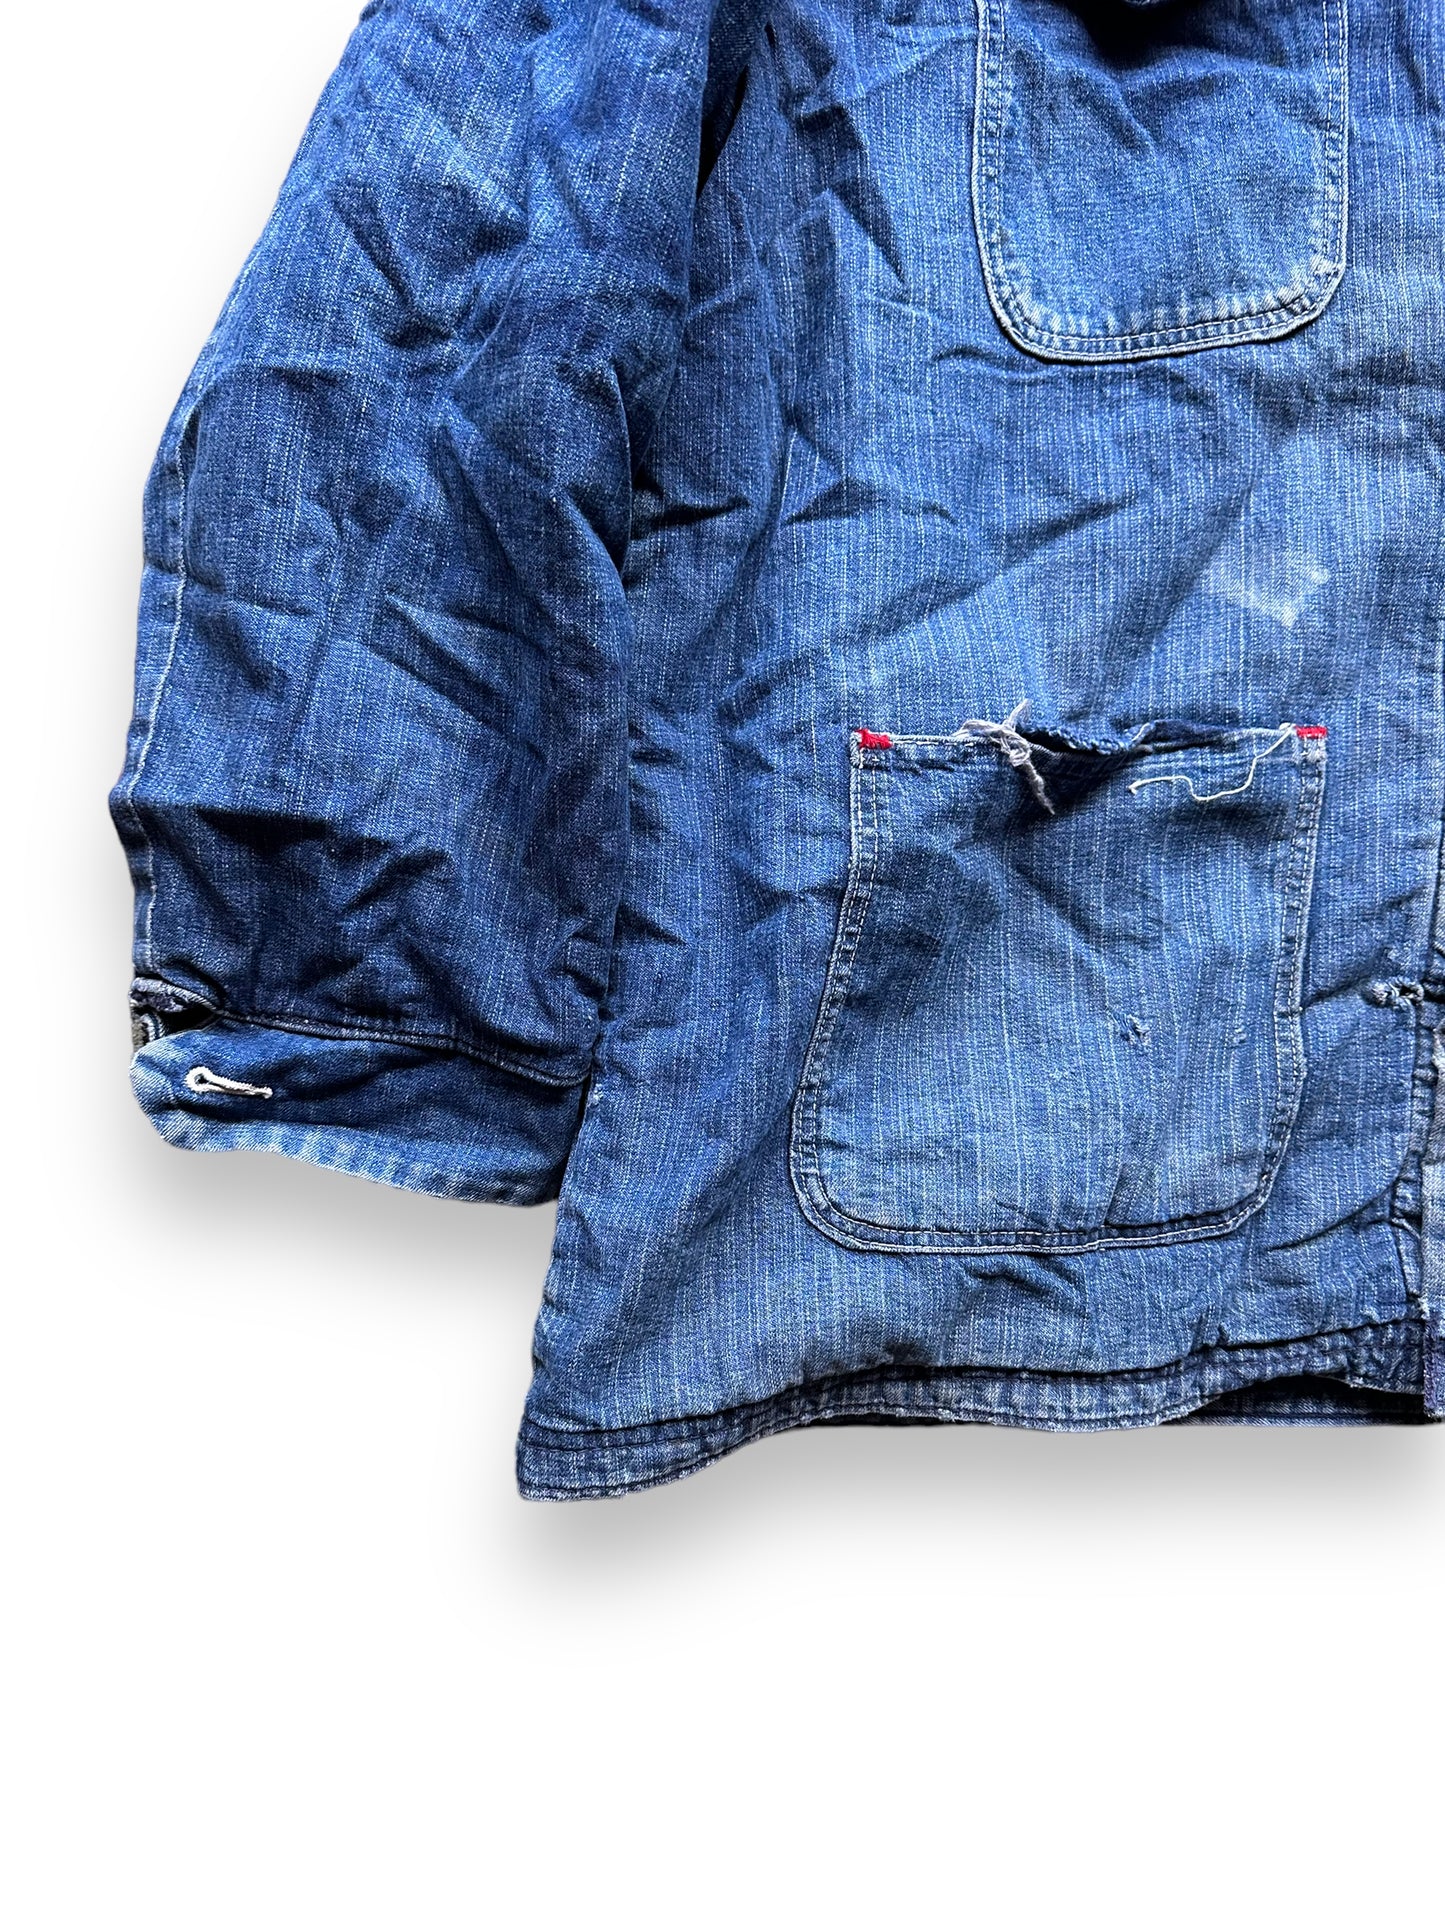 Lower Front Right View of Vintage Blanket Lined Wrangler Blue Bell Chore Coat SZ 50 | Vintage Denim Jacket Seattle | Seattle Vintage Clothing